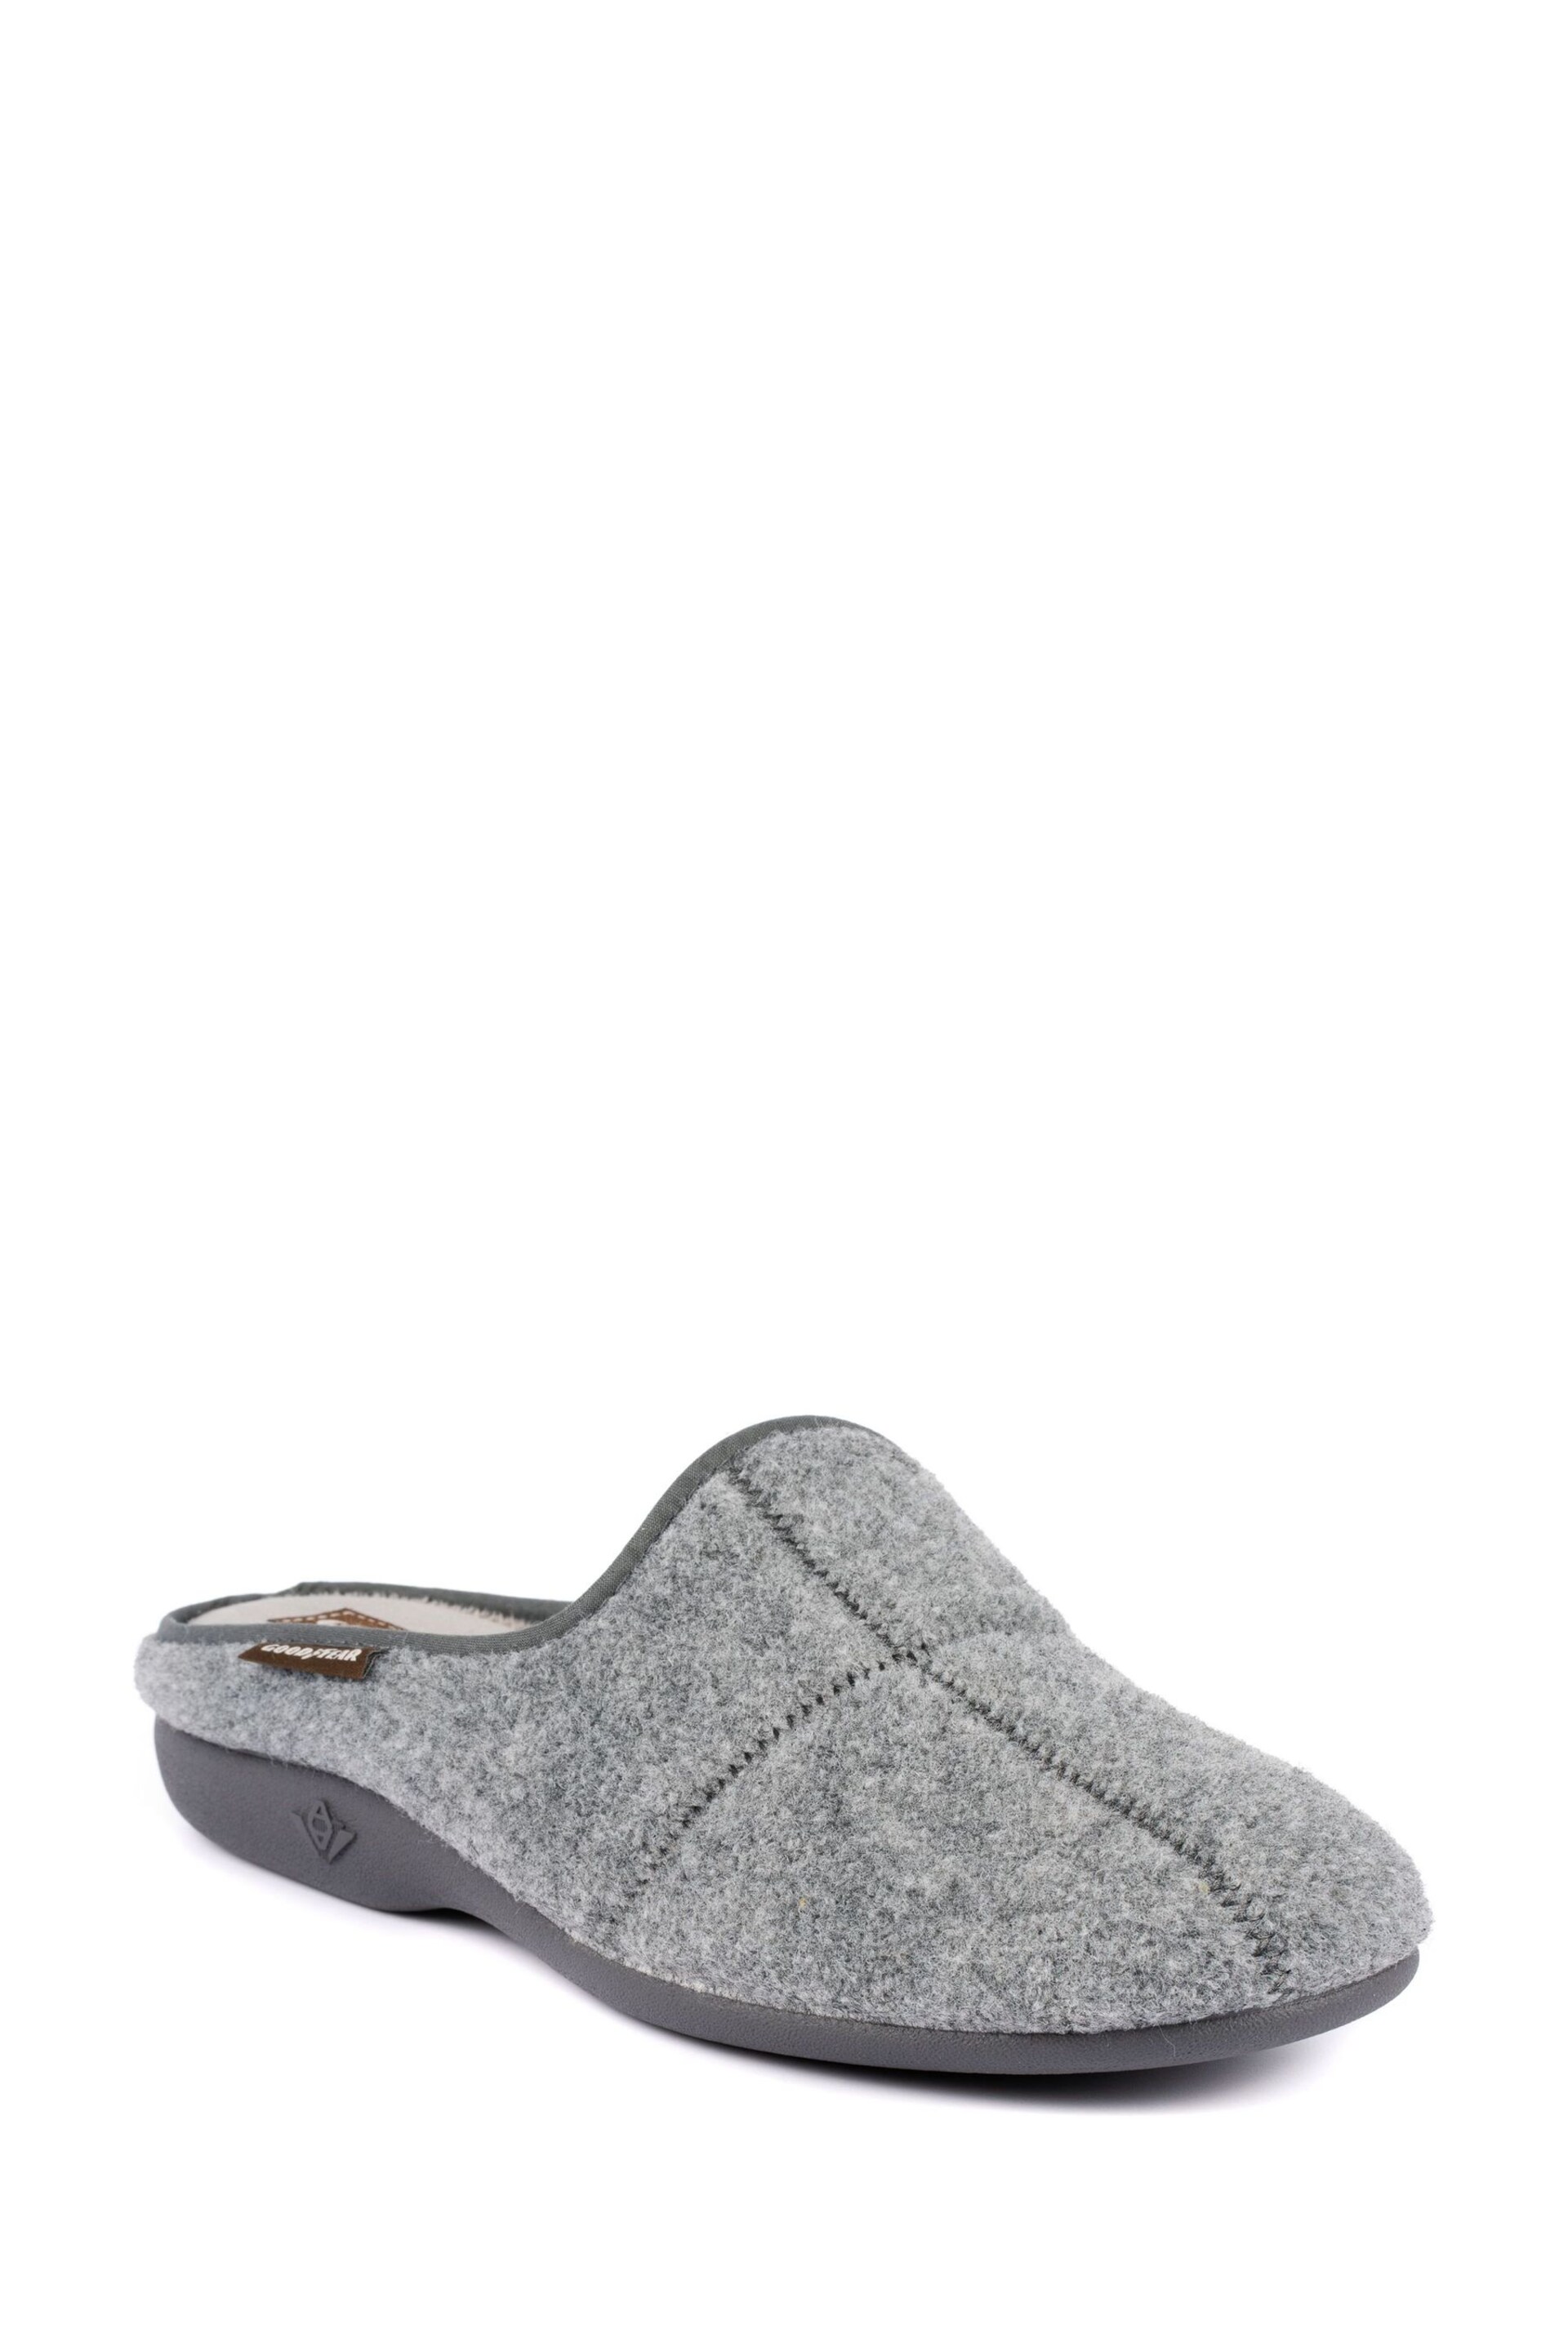 Goodyear Grey Fiasco Grey Mule Slippers - Image 3 of 6